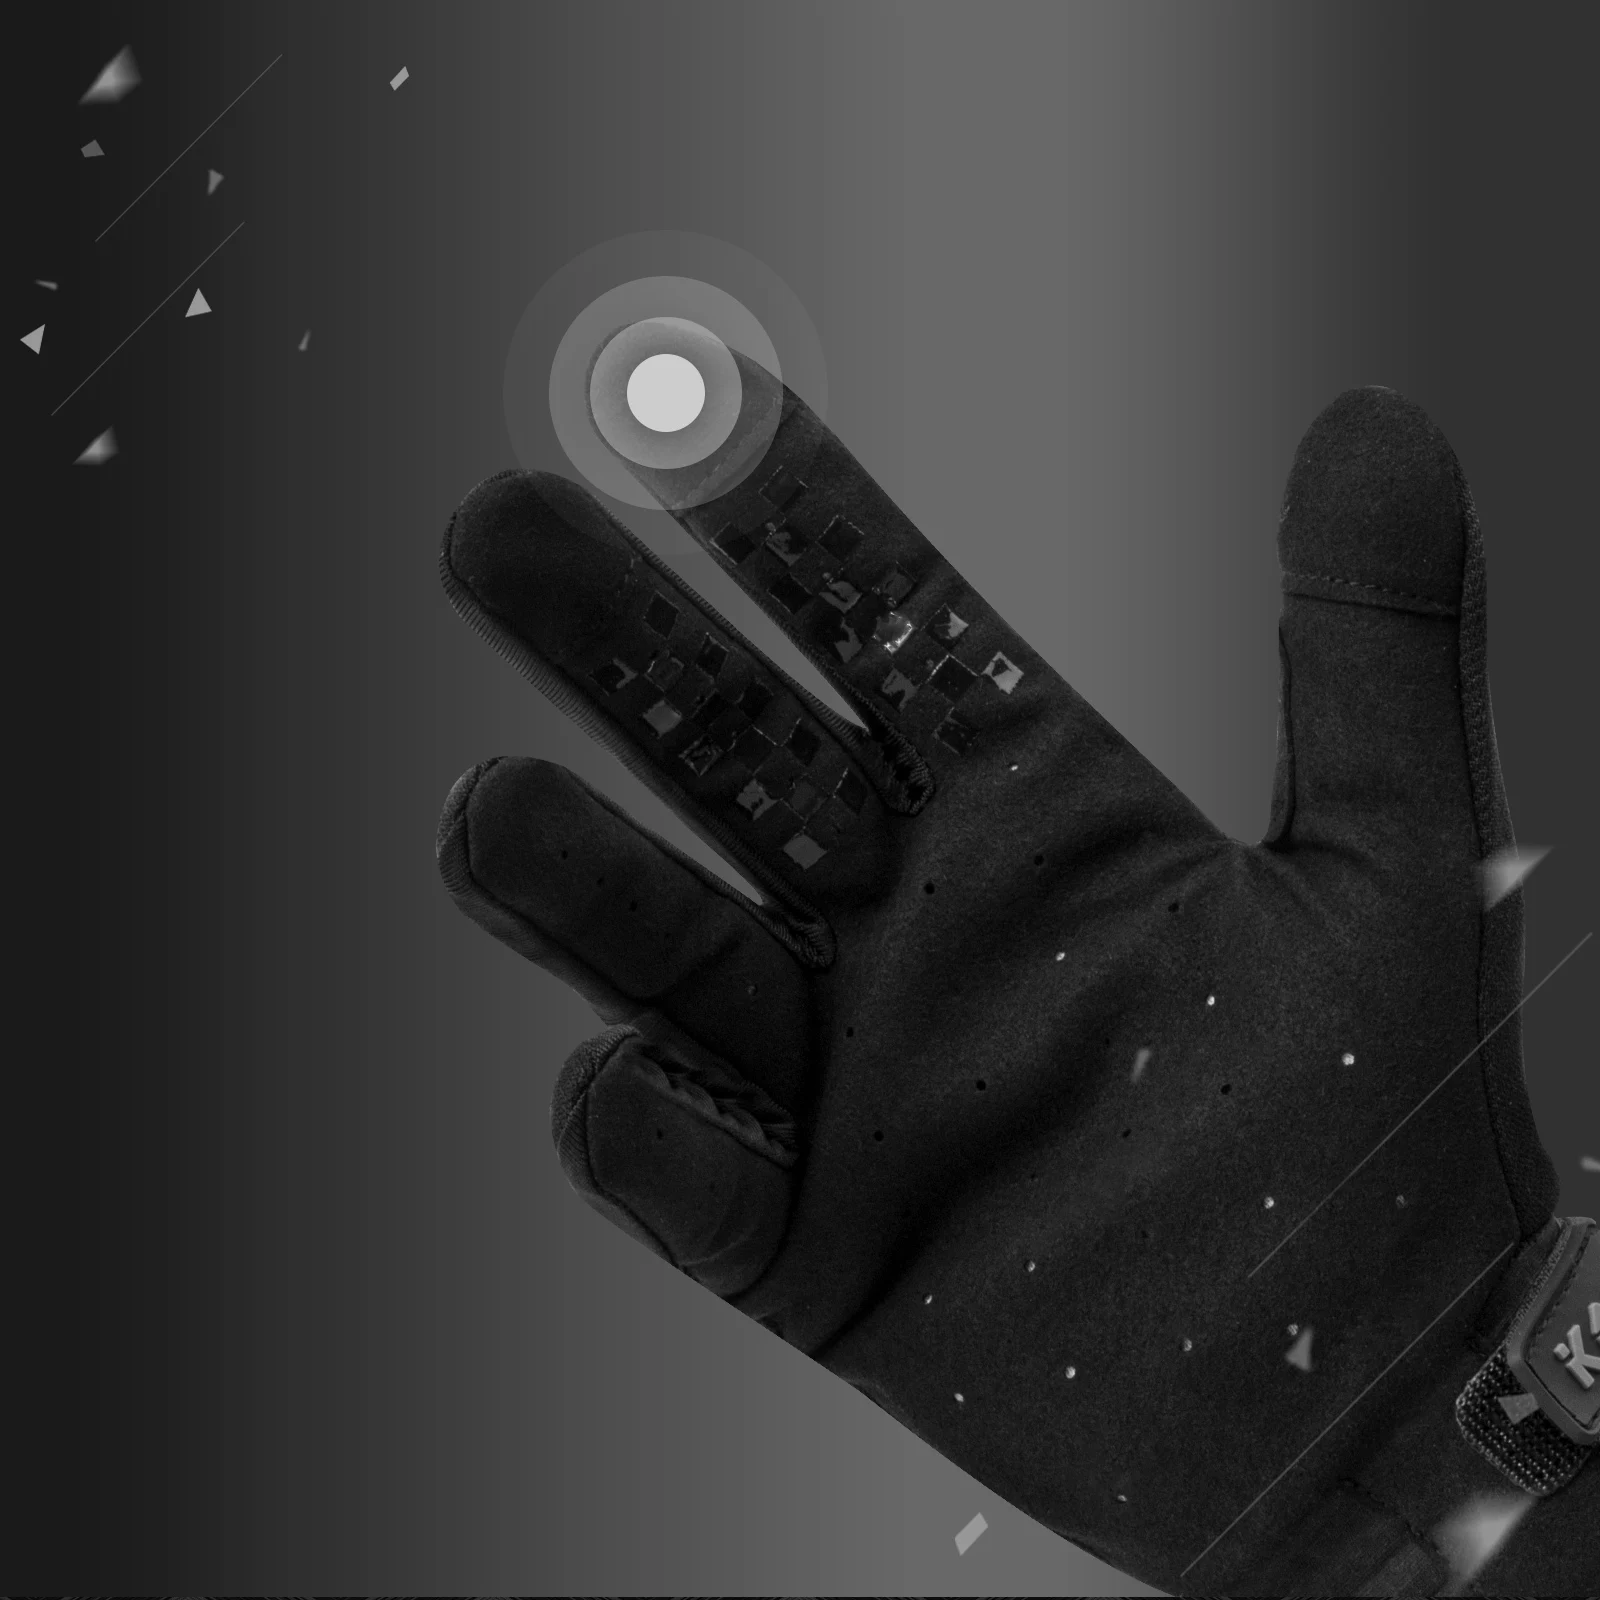 Unisex Sport New Full Finger Cycling Gloves Touchscreen